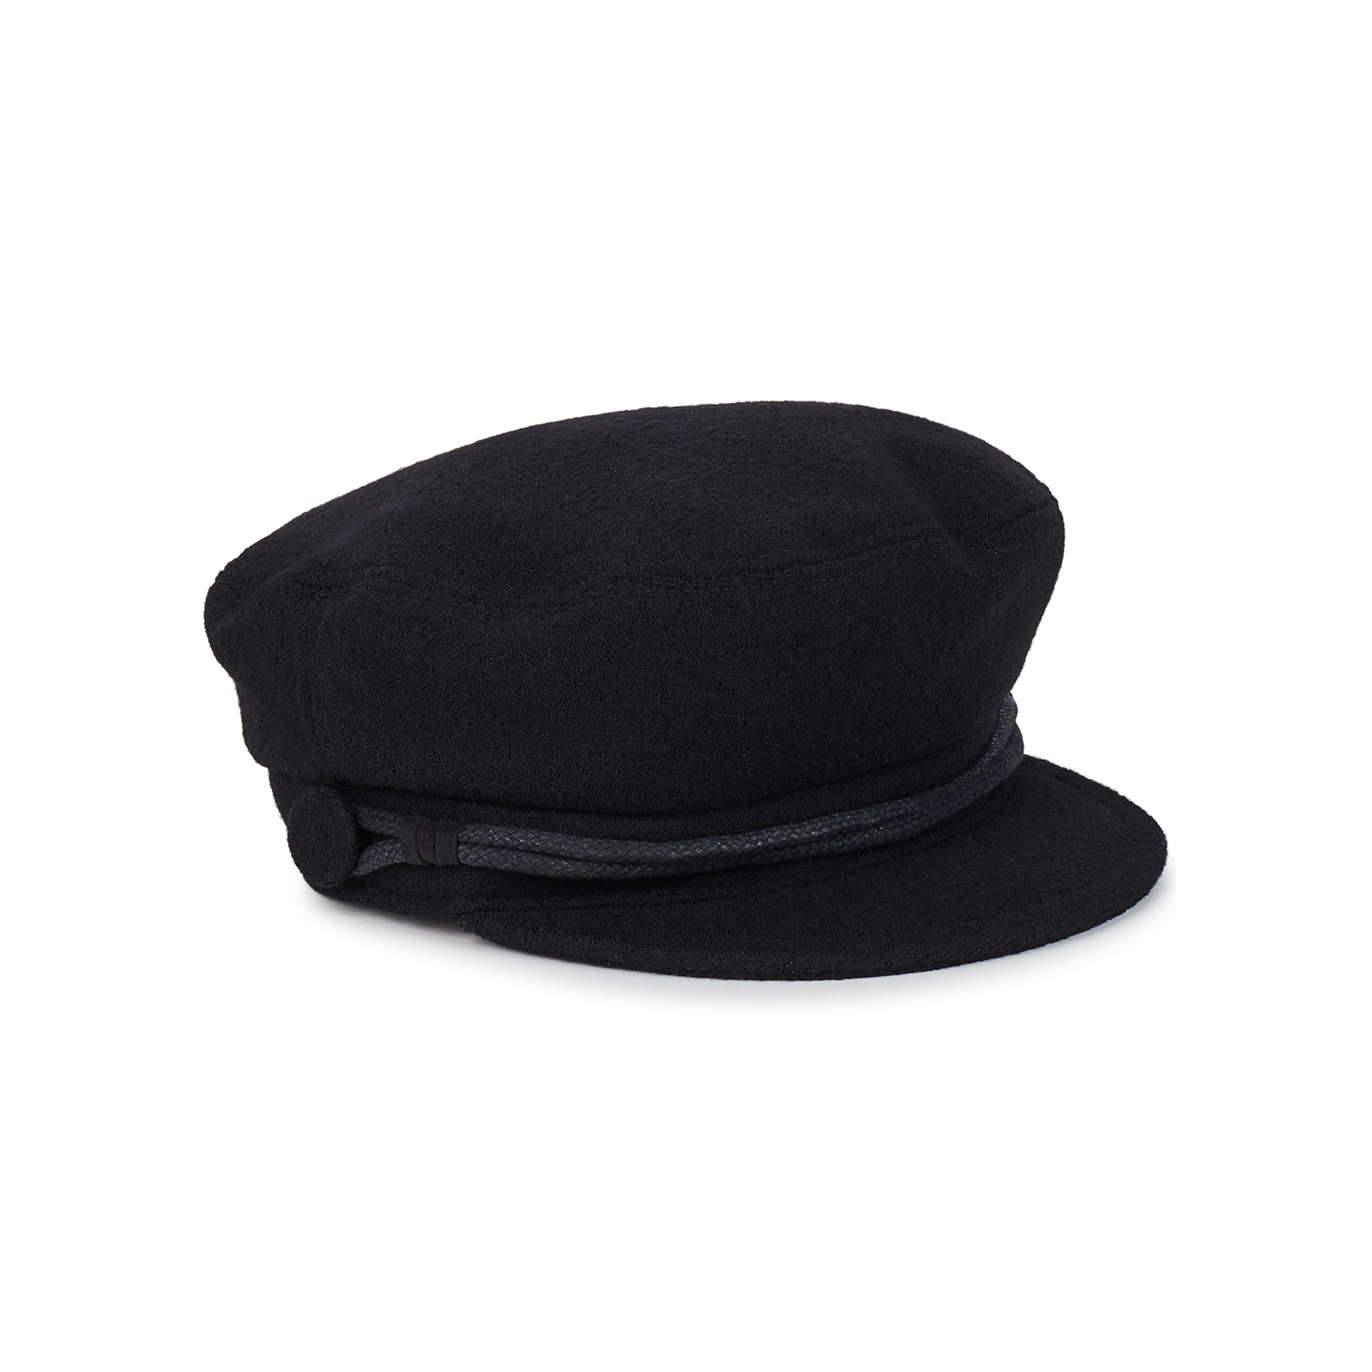 New Abby Black Wool cap